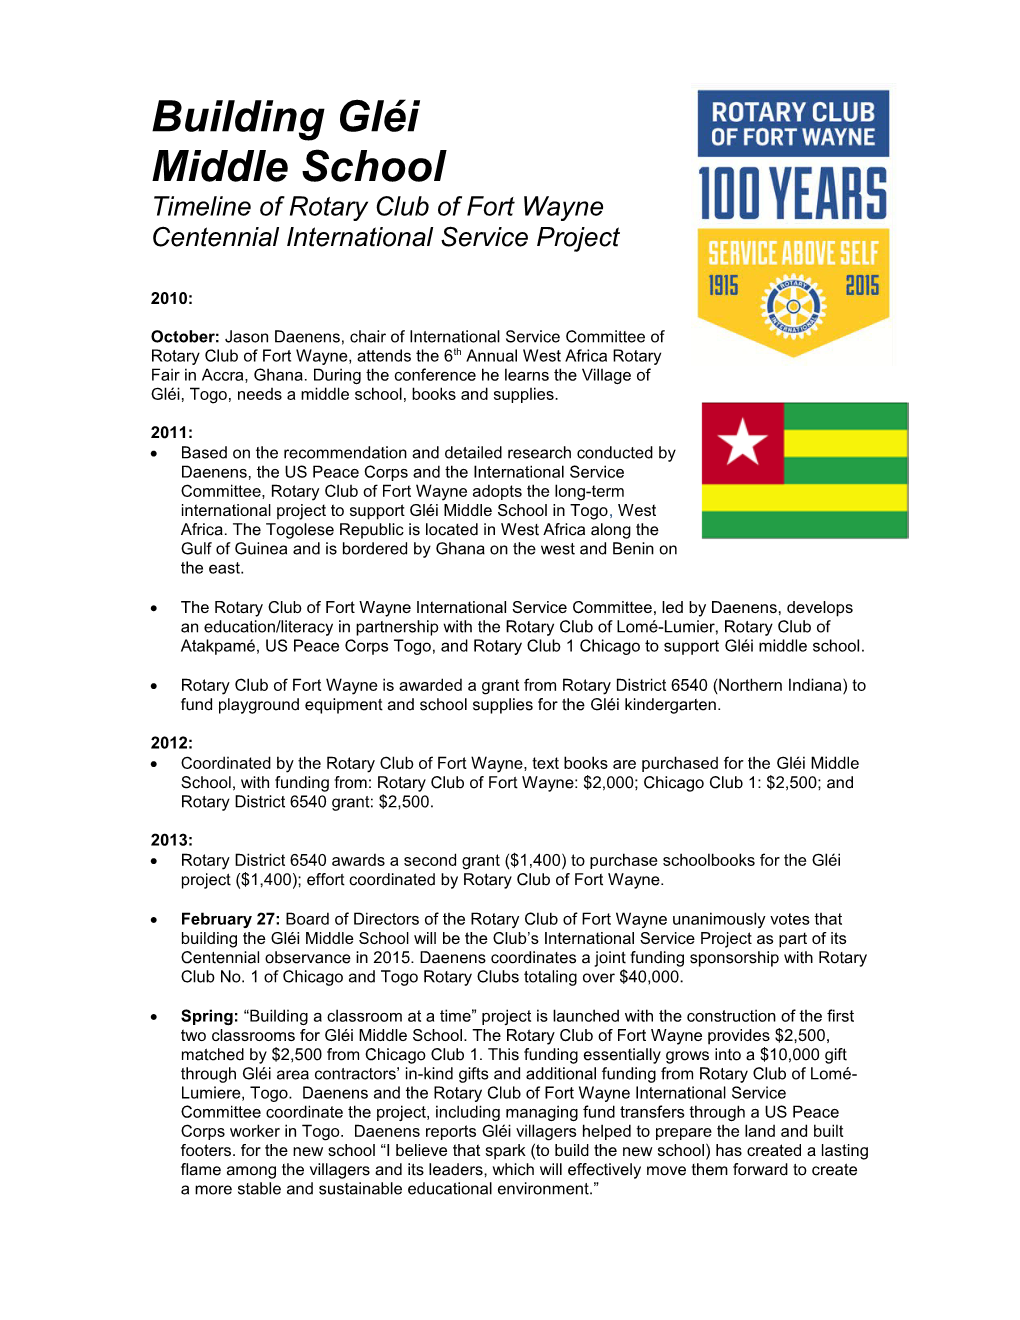 Timeline of Rotary Club of Fort Wayne Centennialinternational Service Project